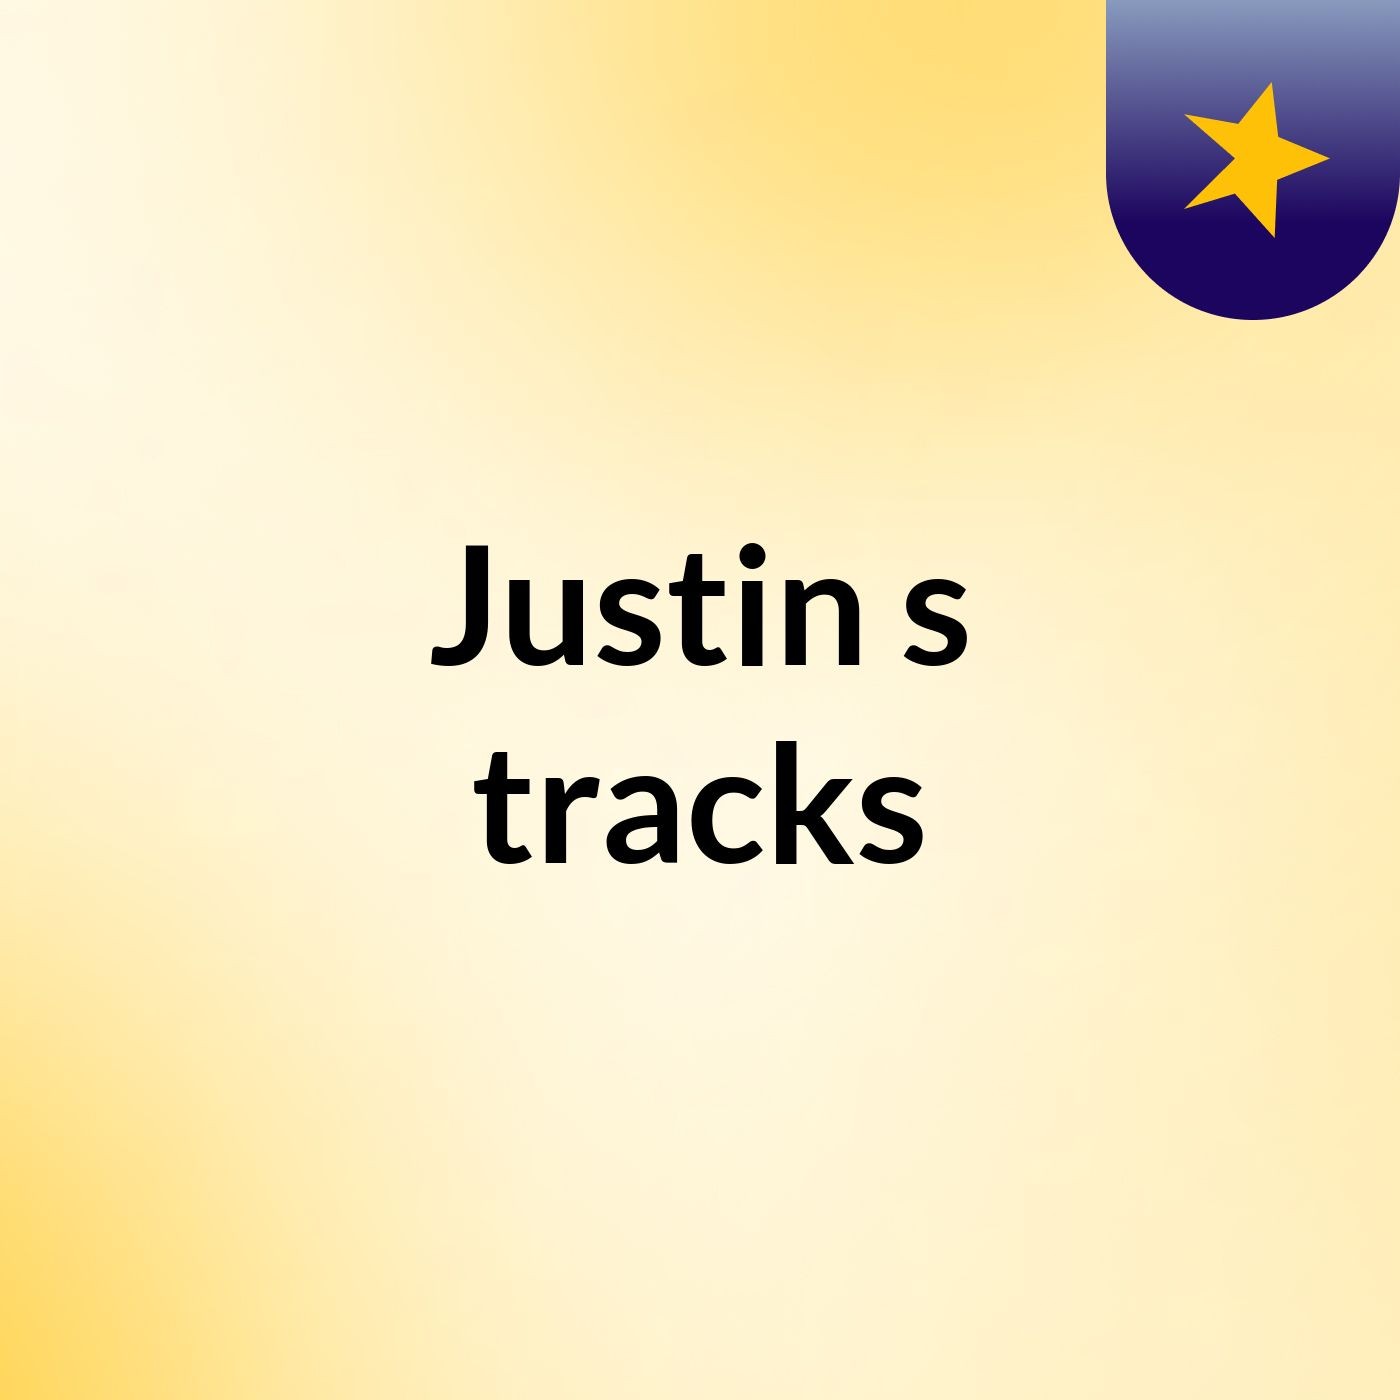 Justin's tracks